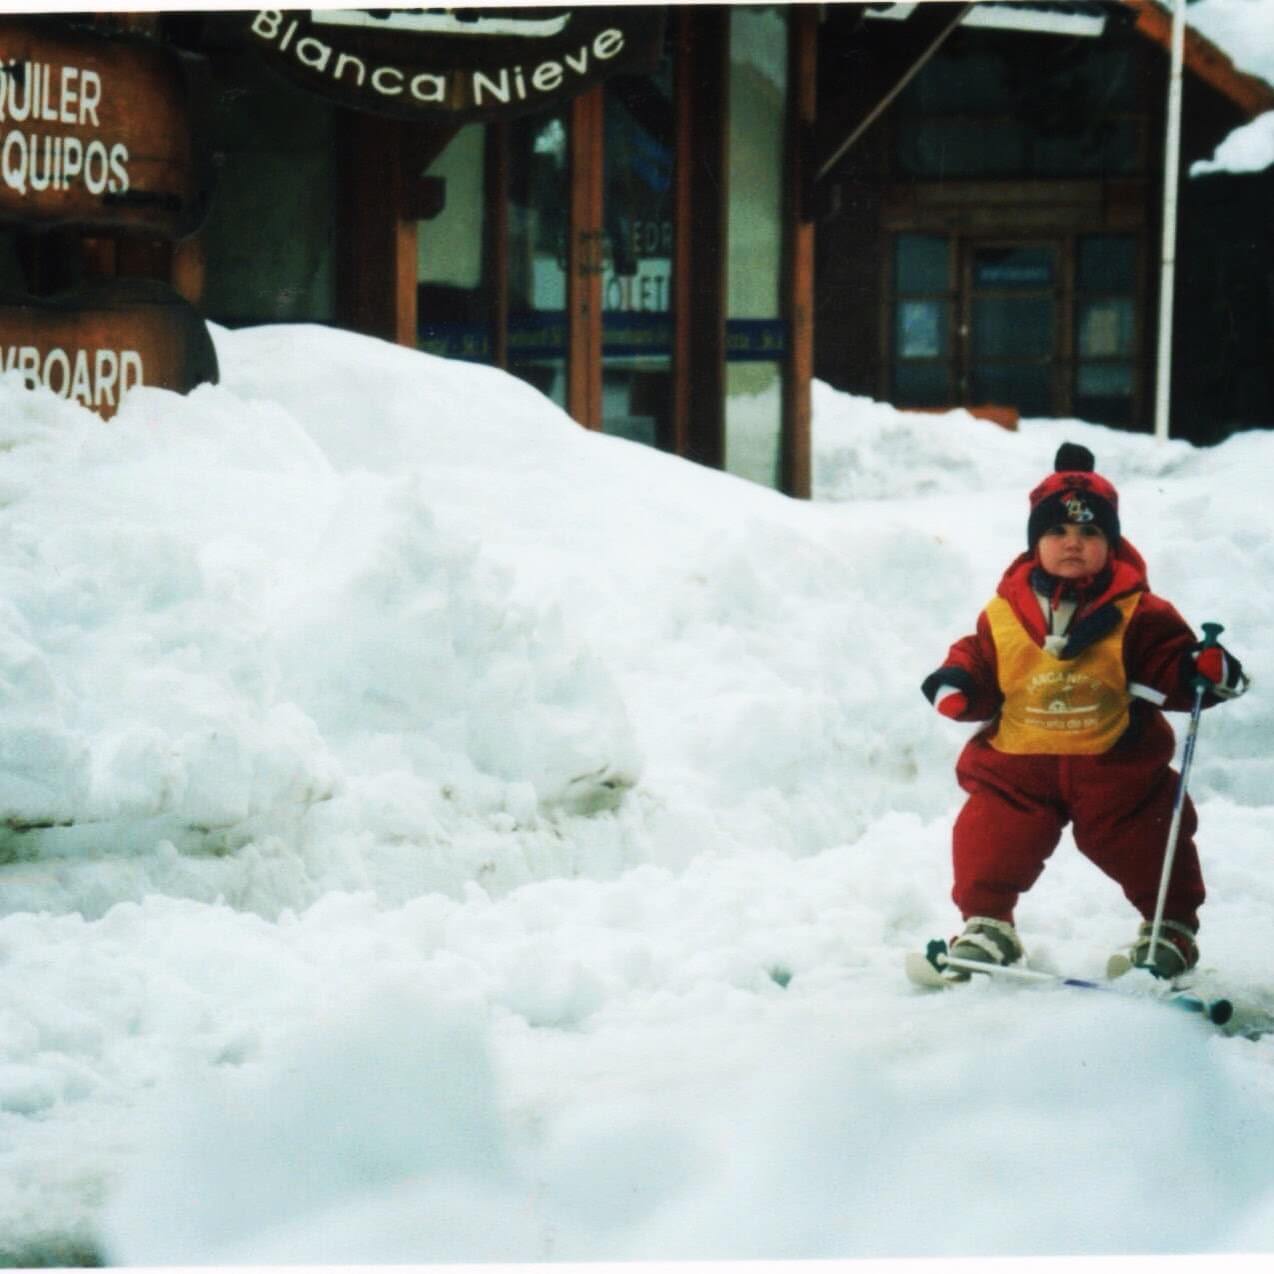 Blanca Nieve ski infantil Sierra Nevada